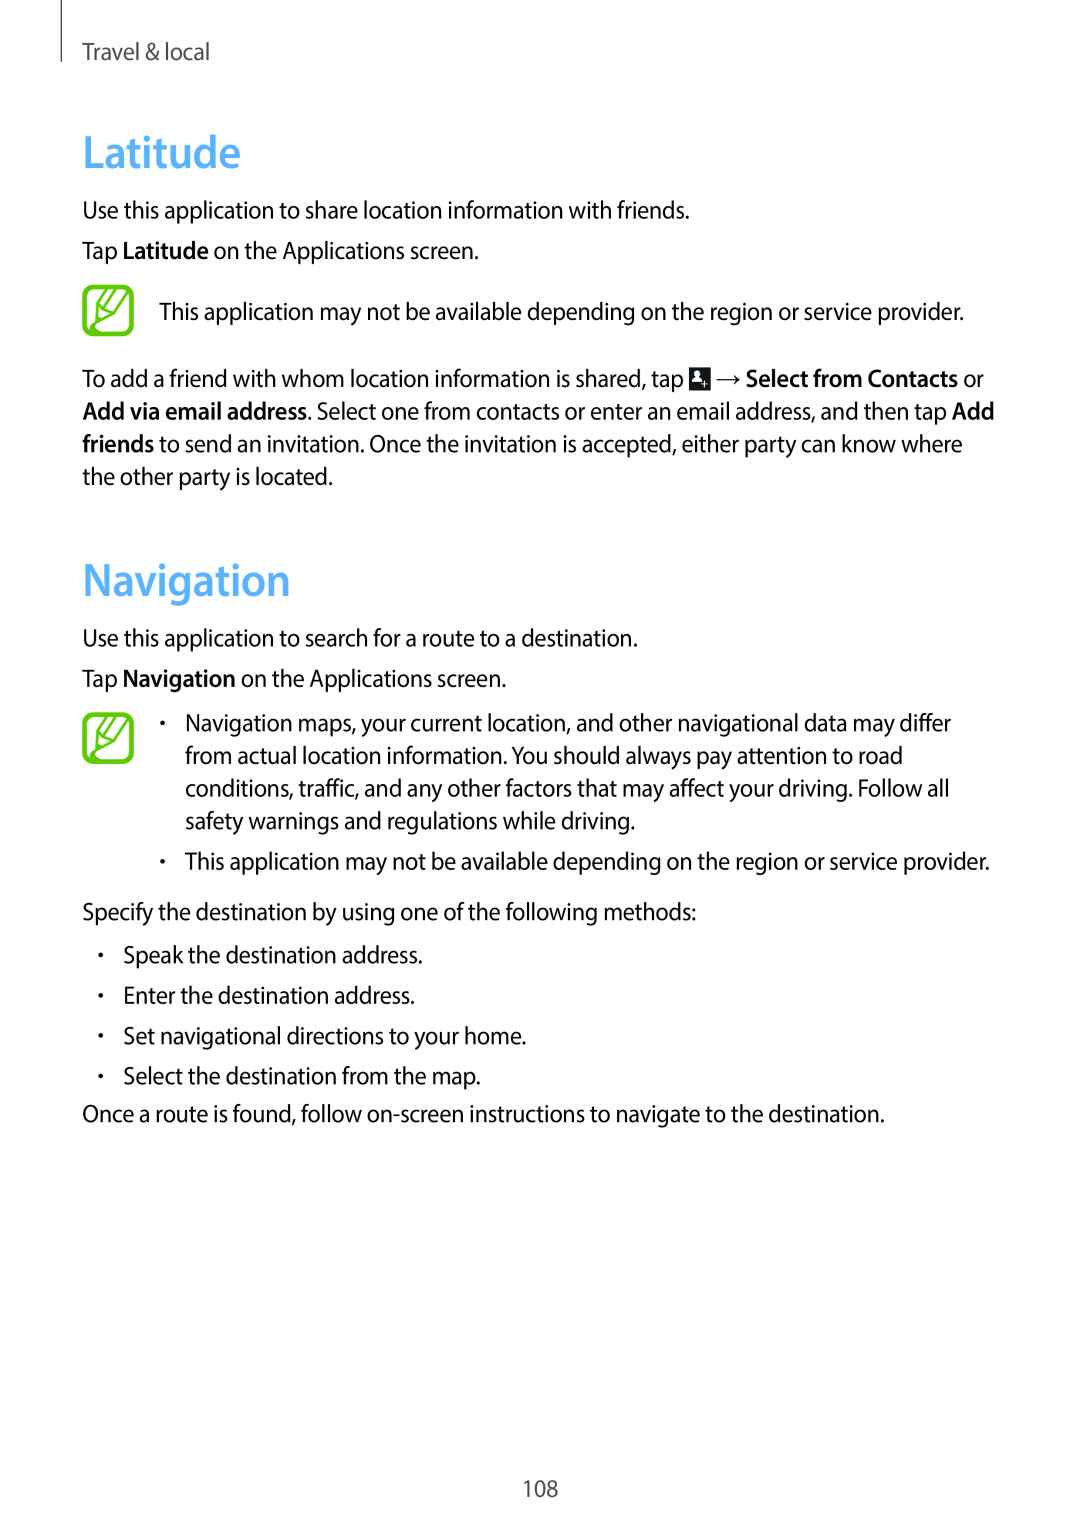 Samsung EK-GC100 user manual Latitude, Navigation, Travel & local 